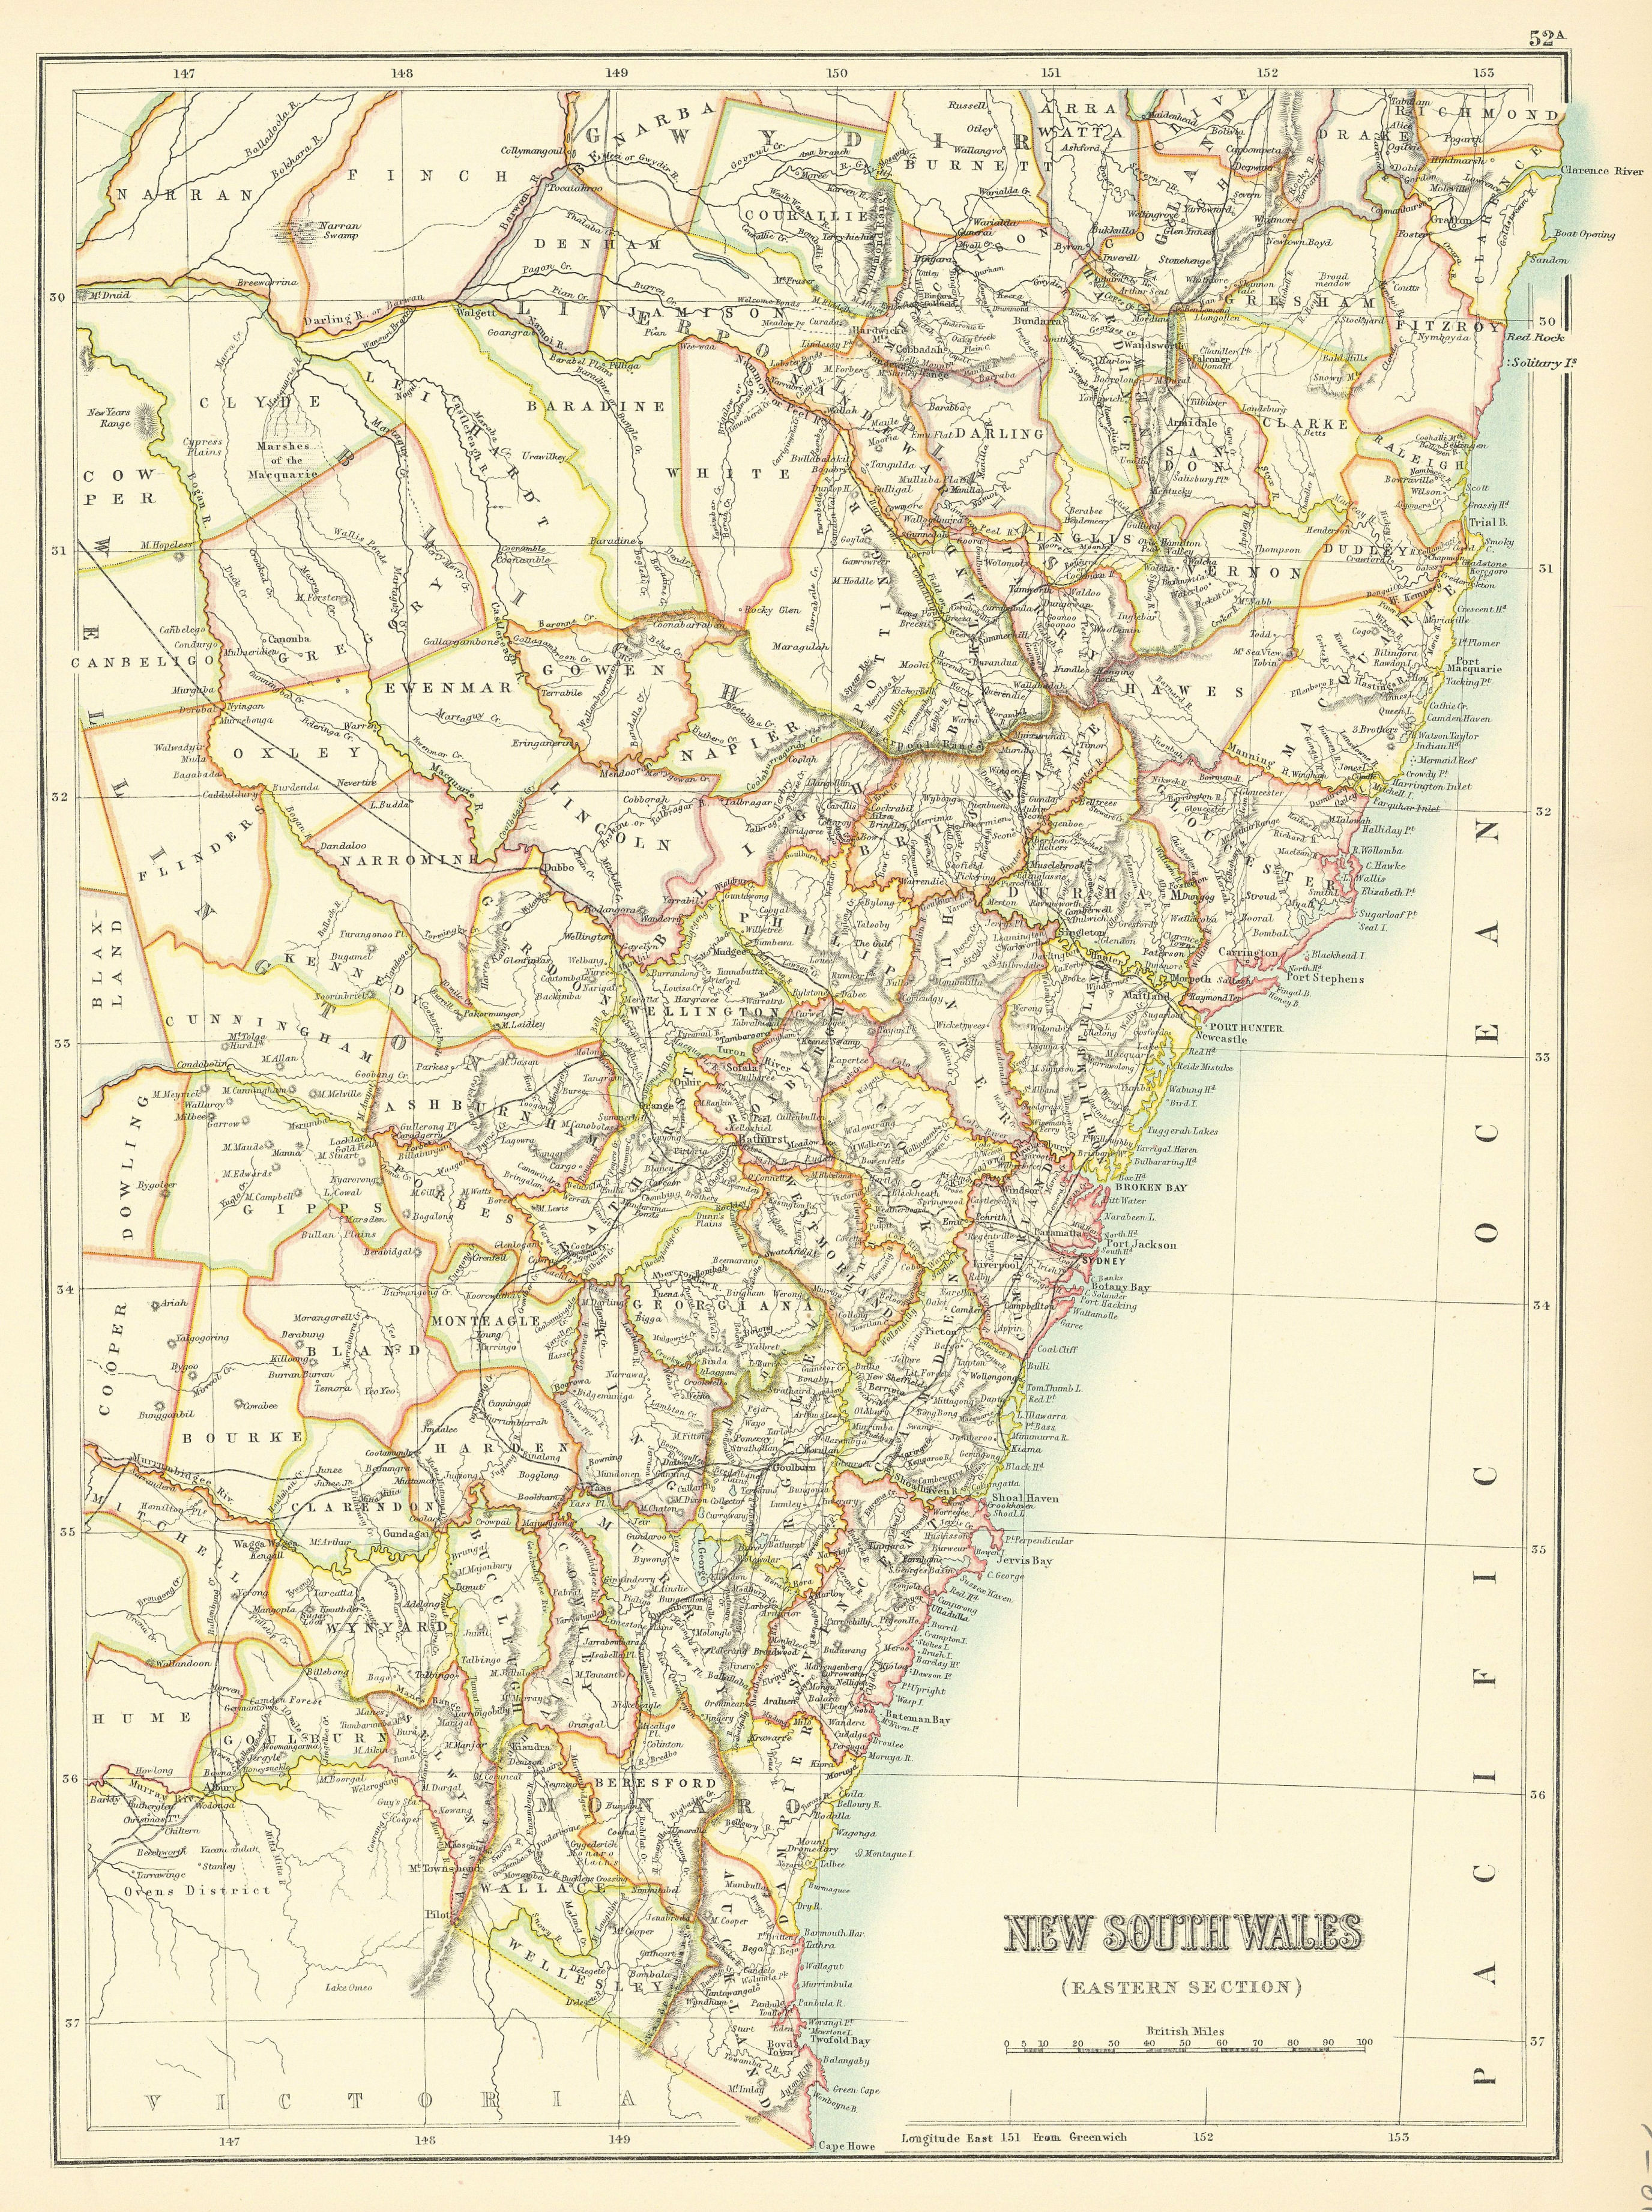 Associate Product New South Wales Eastern / coast. Australia. Railways. BARTHOLOMEW 1898 old map